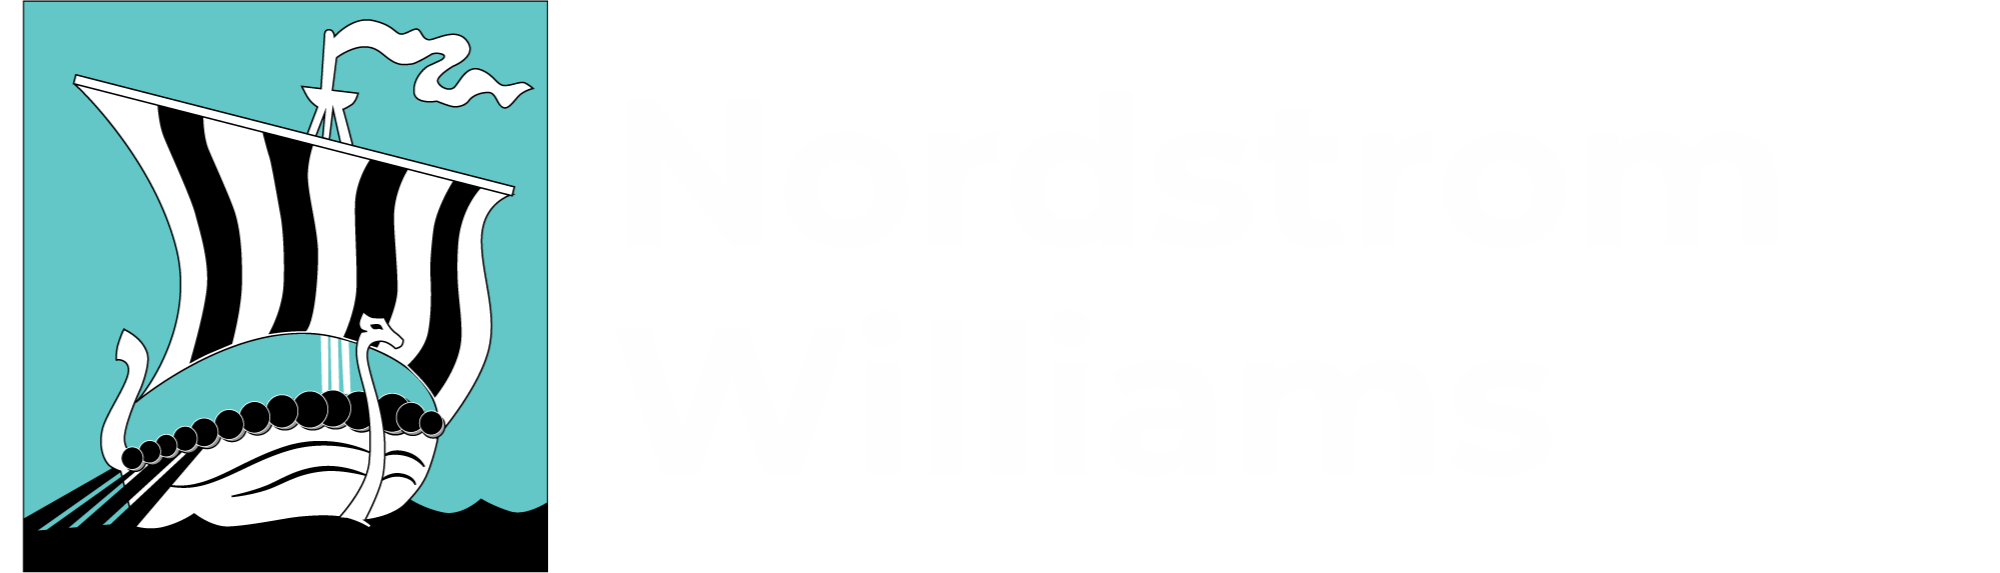 Nordstrom Williams